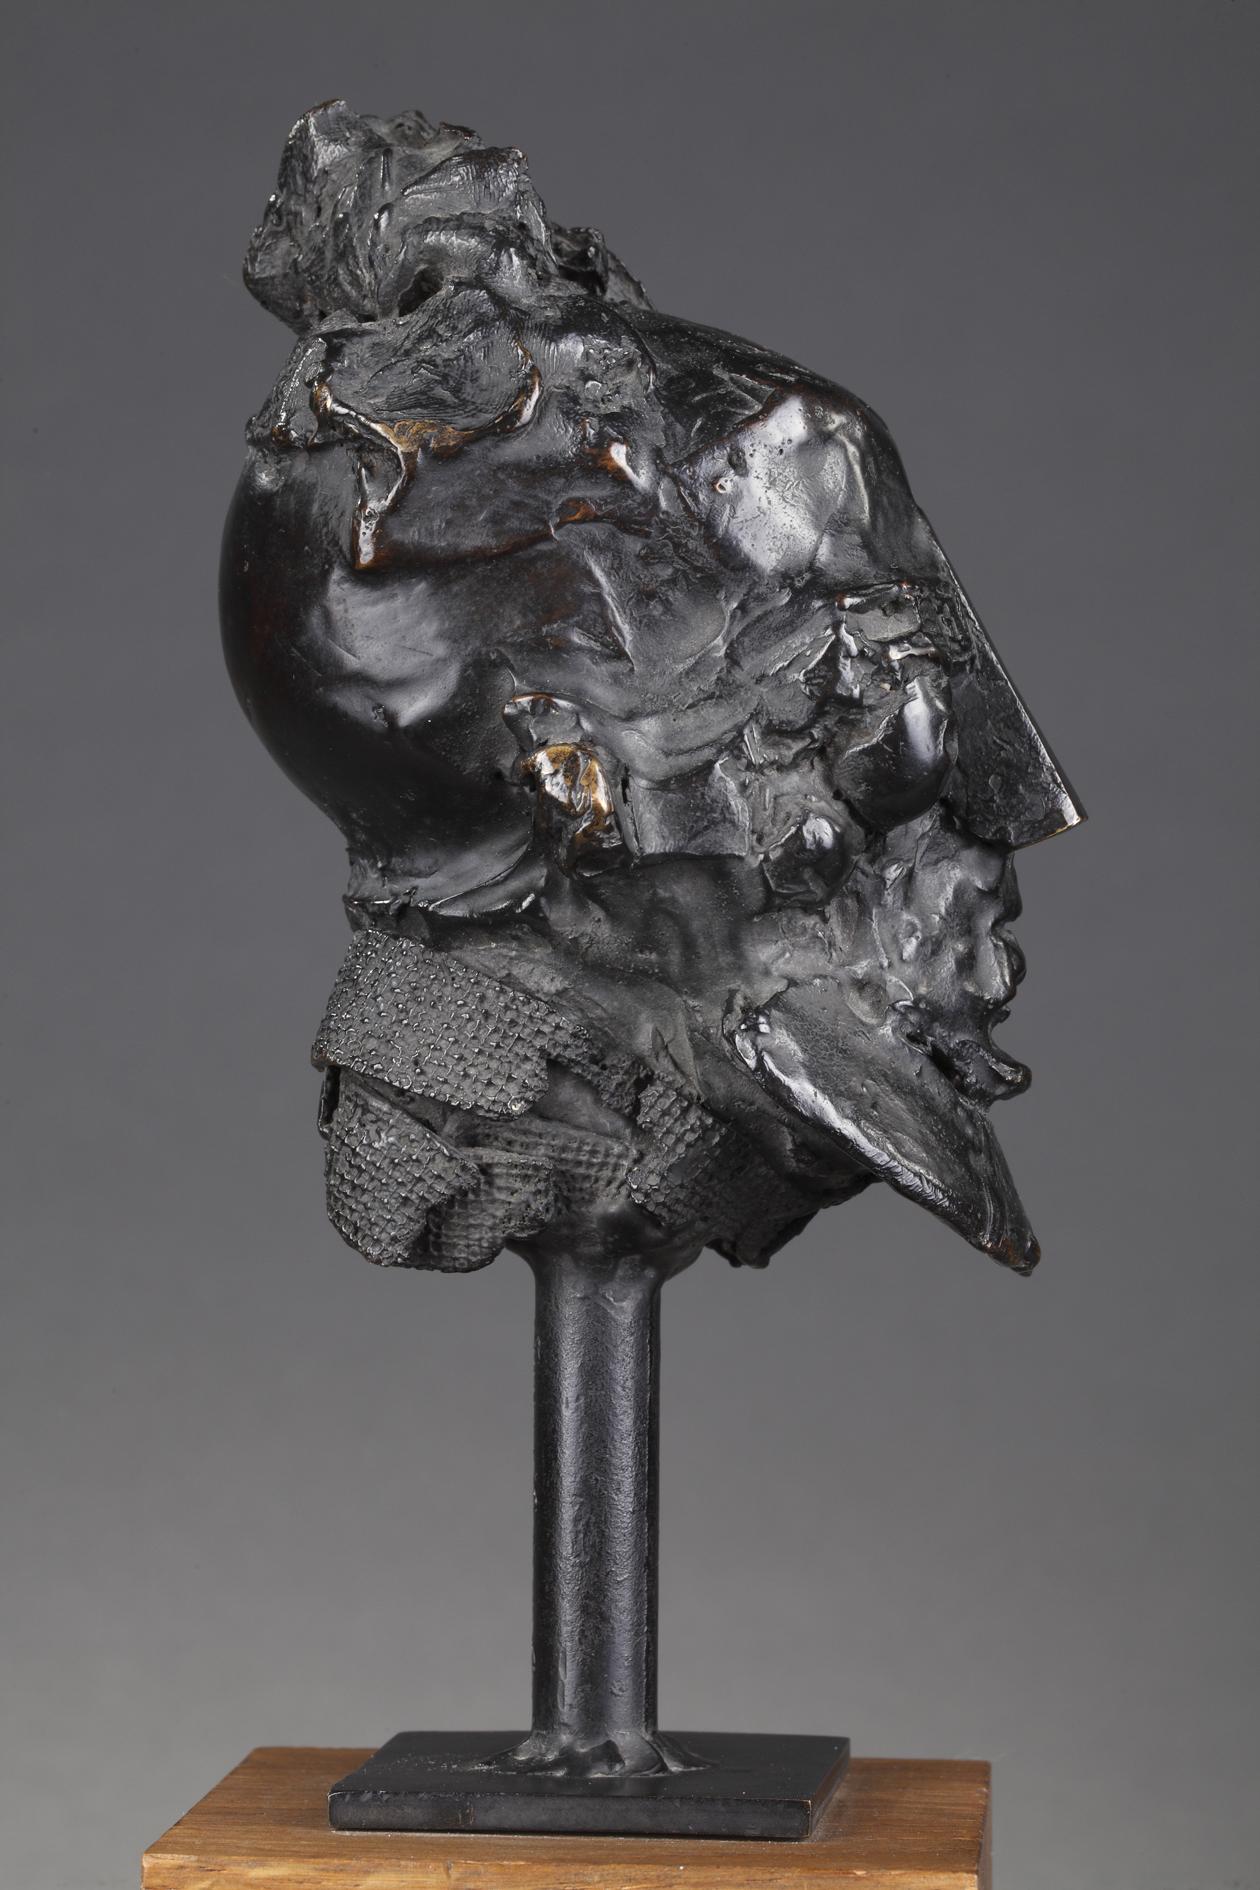 Laurent Belloni (geb. 1969)
Kopf eines Mannes
 
Bronzeguss mit nuancierter schwarzer Patina
Signiert 